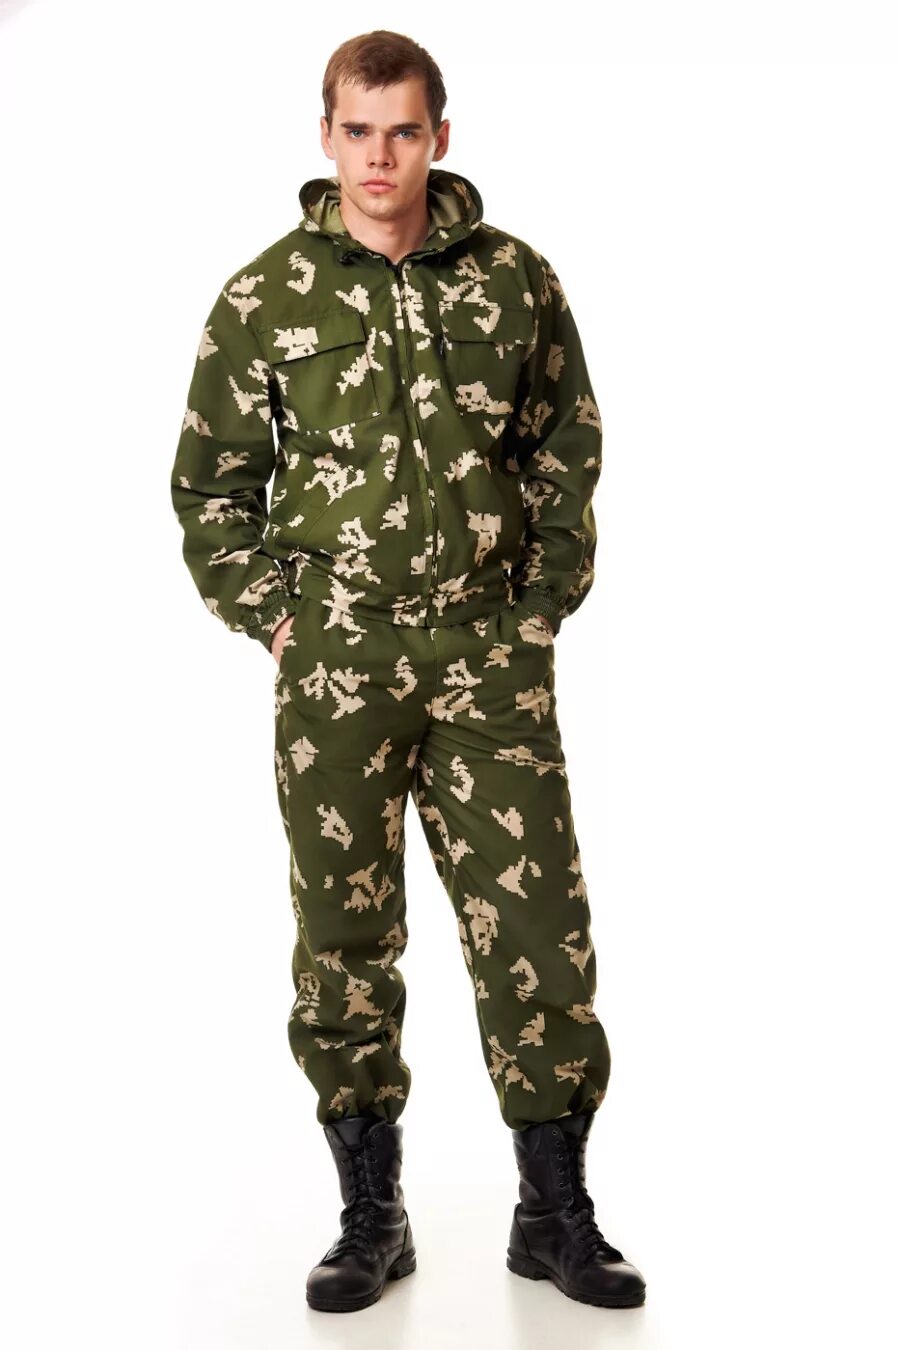 Армейский камуфляжный костюм. Маскхалат Березка. Маскхалат летний Березка. Камуфляж маскхалат "Березка". Костюм маскировочный халат Березка.